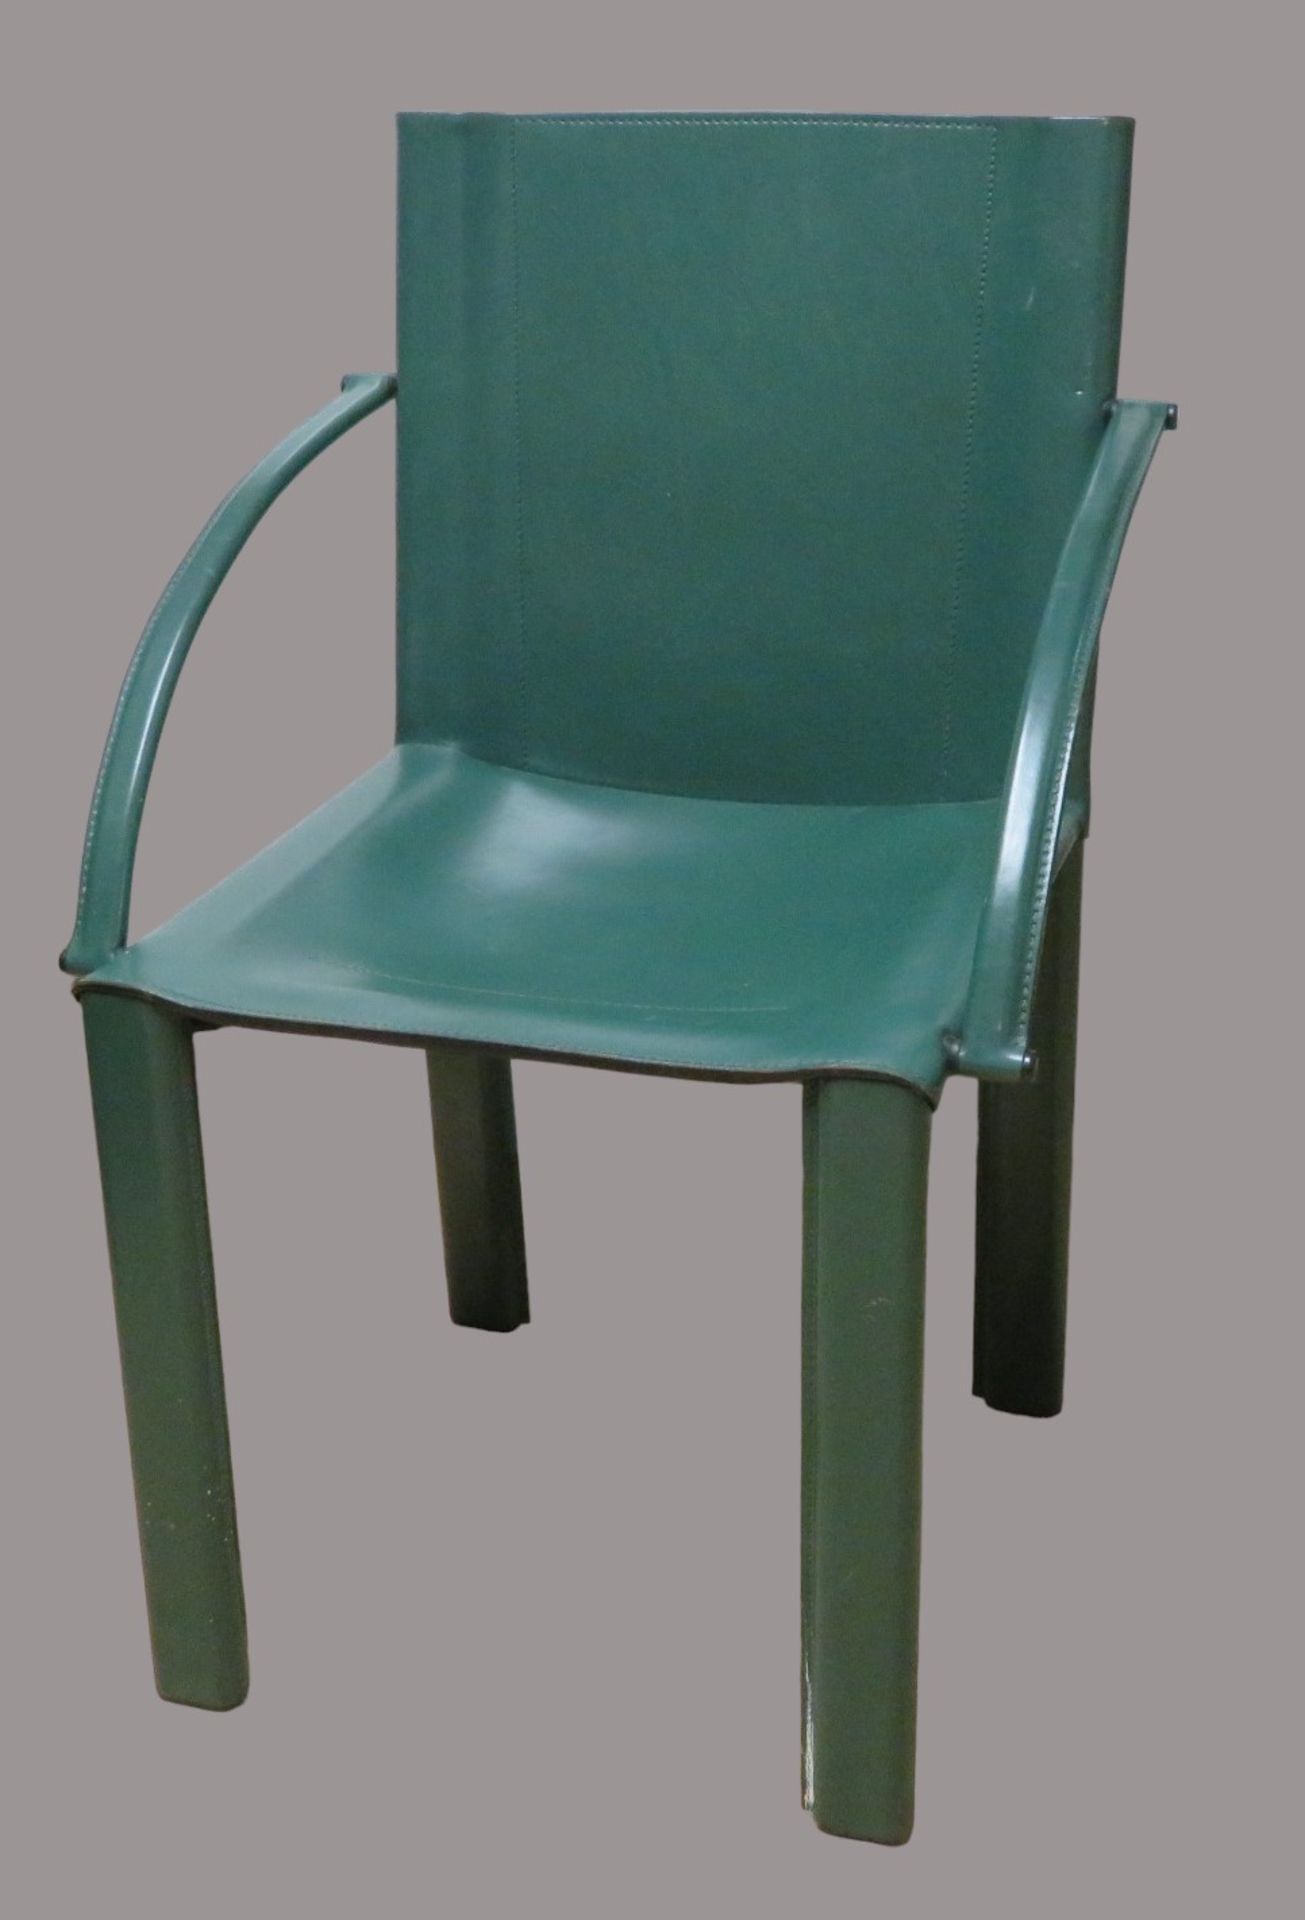 2 Designer Armlehnstühle, geschwärztes Metall mit grünem Lederbezug, gem. "Matteo Grassi", Gebrauch